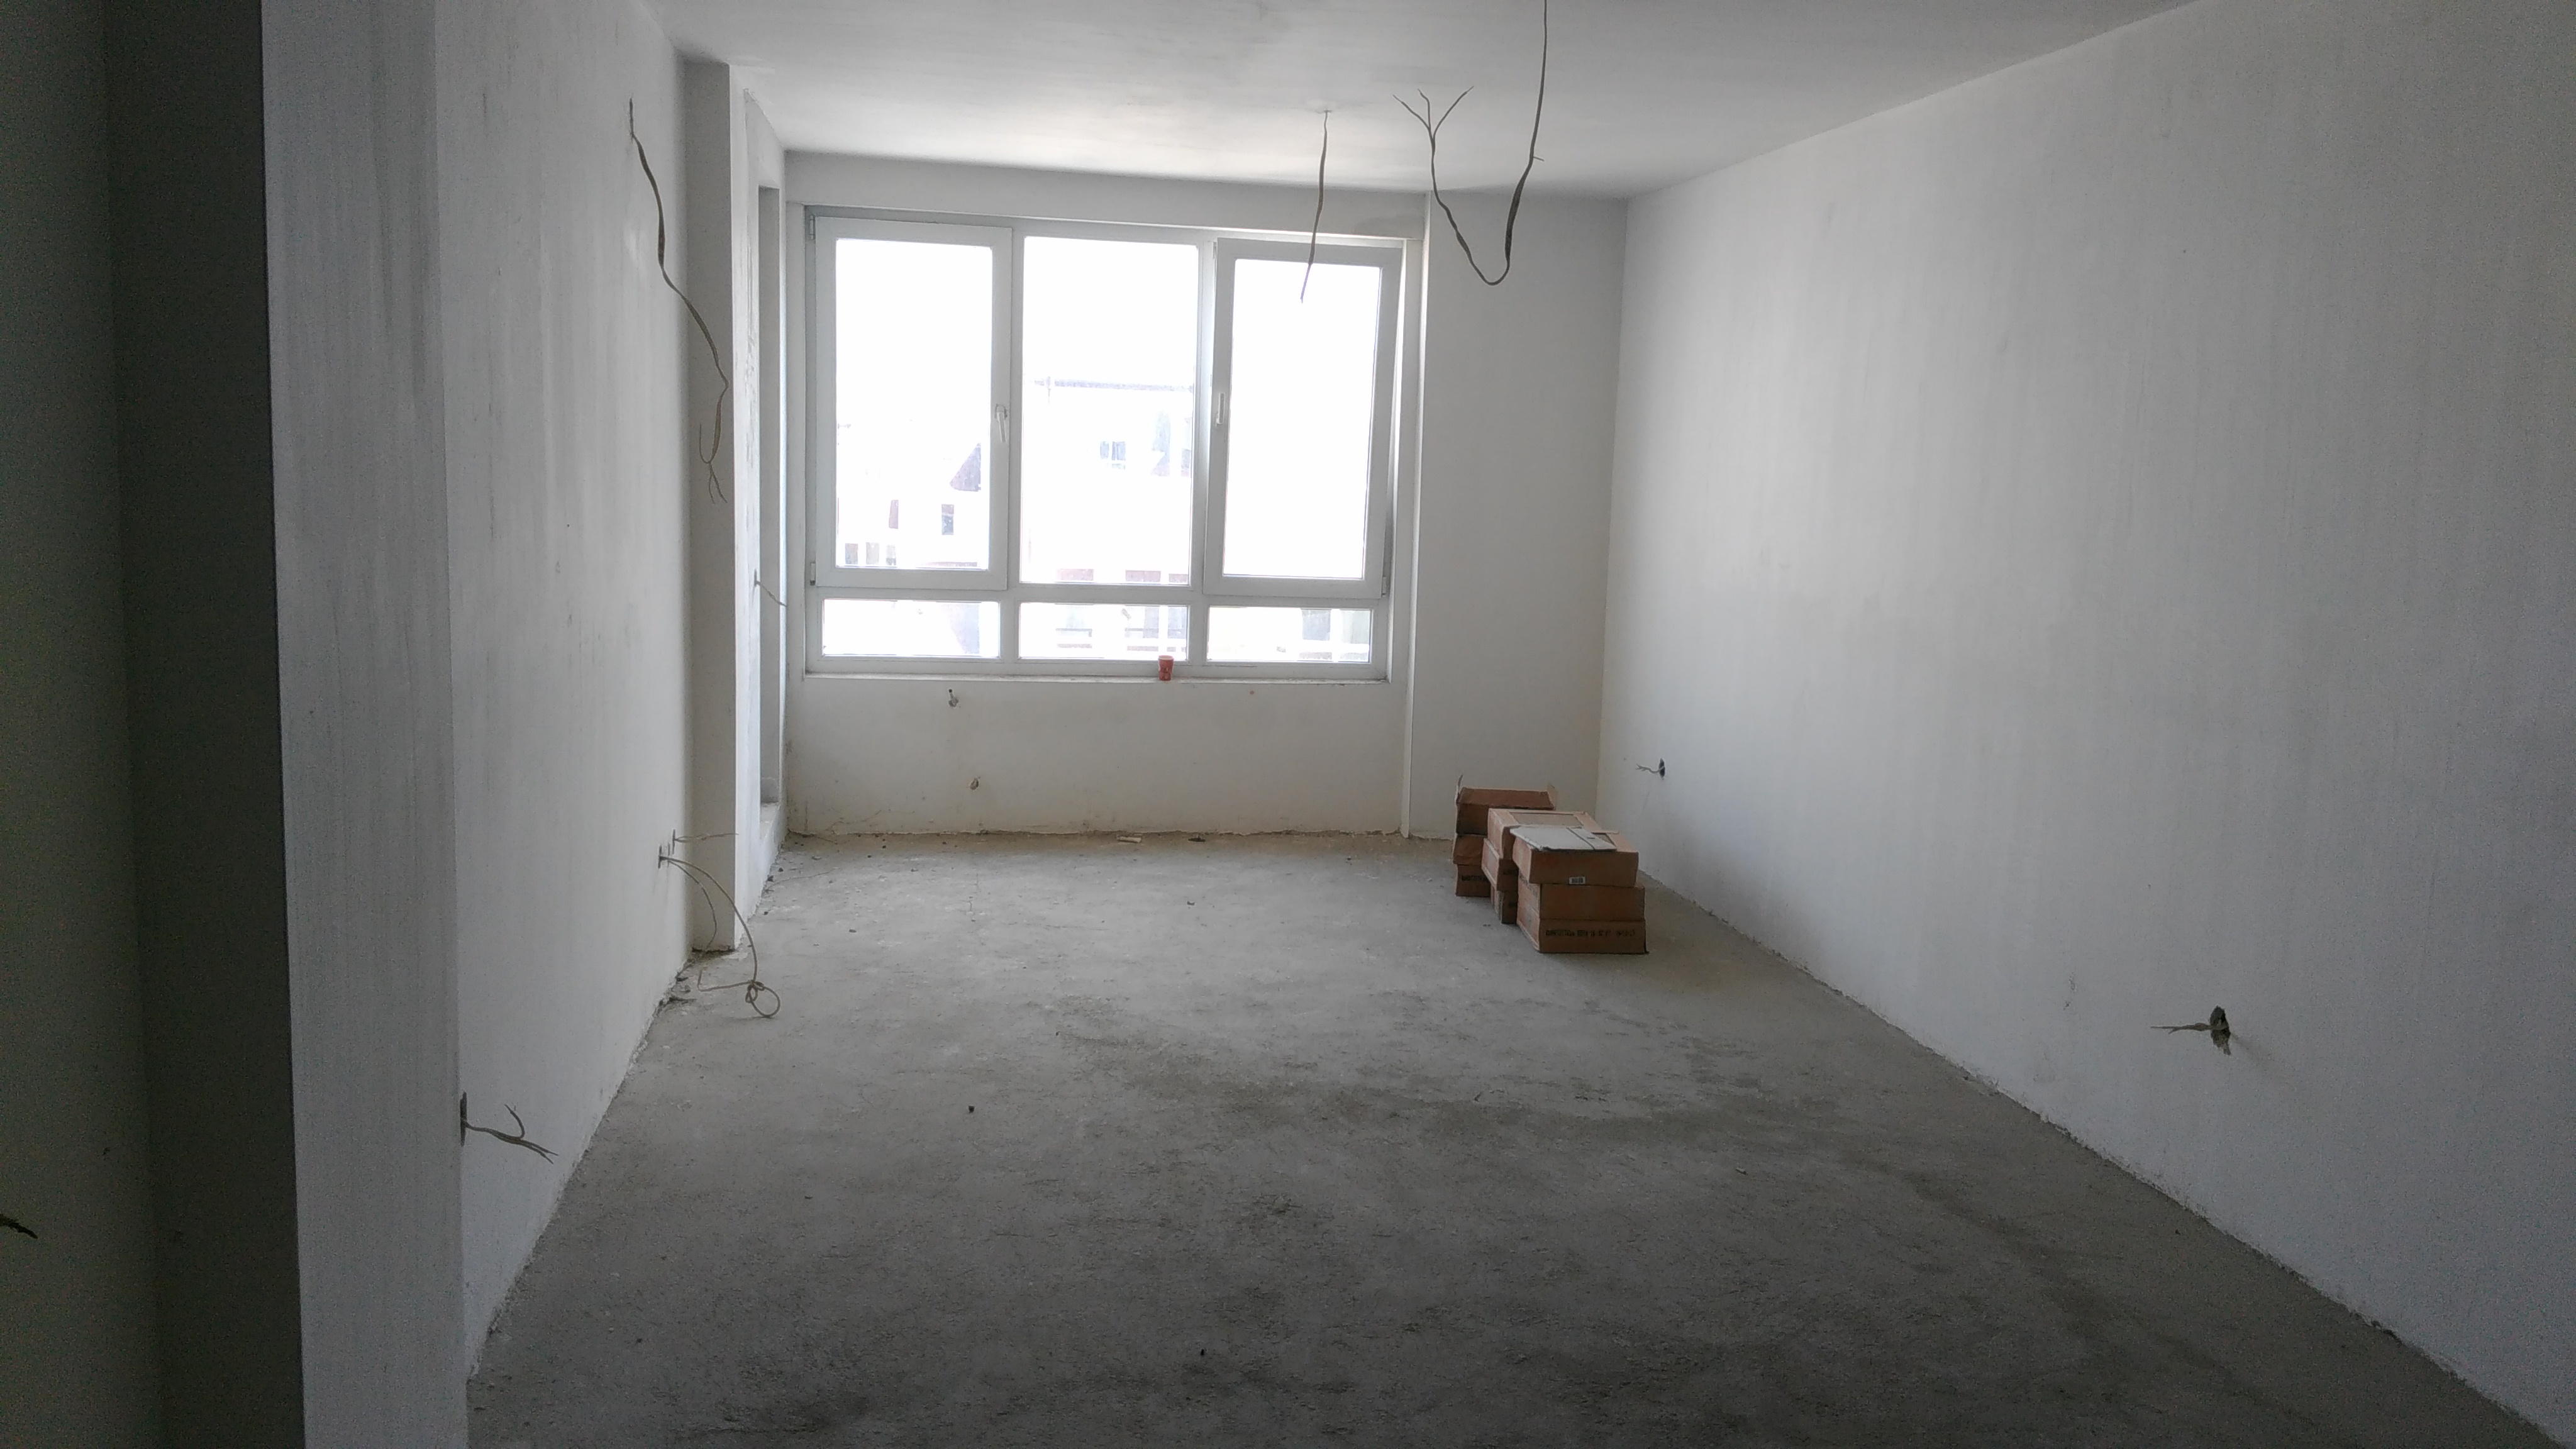  Нов 3 стаен апартамент, ж.к. Дървеница, цена 113900 евро - топ локация - image